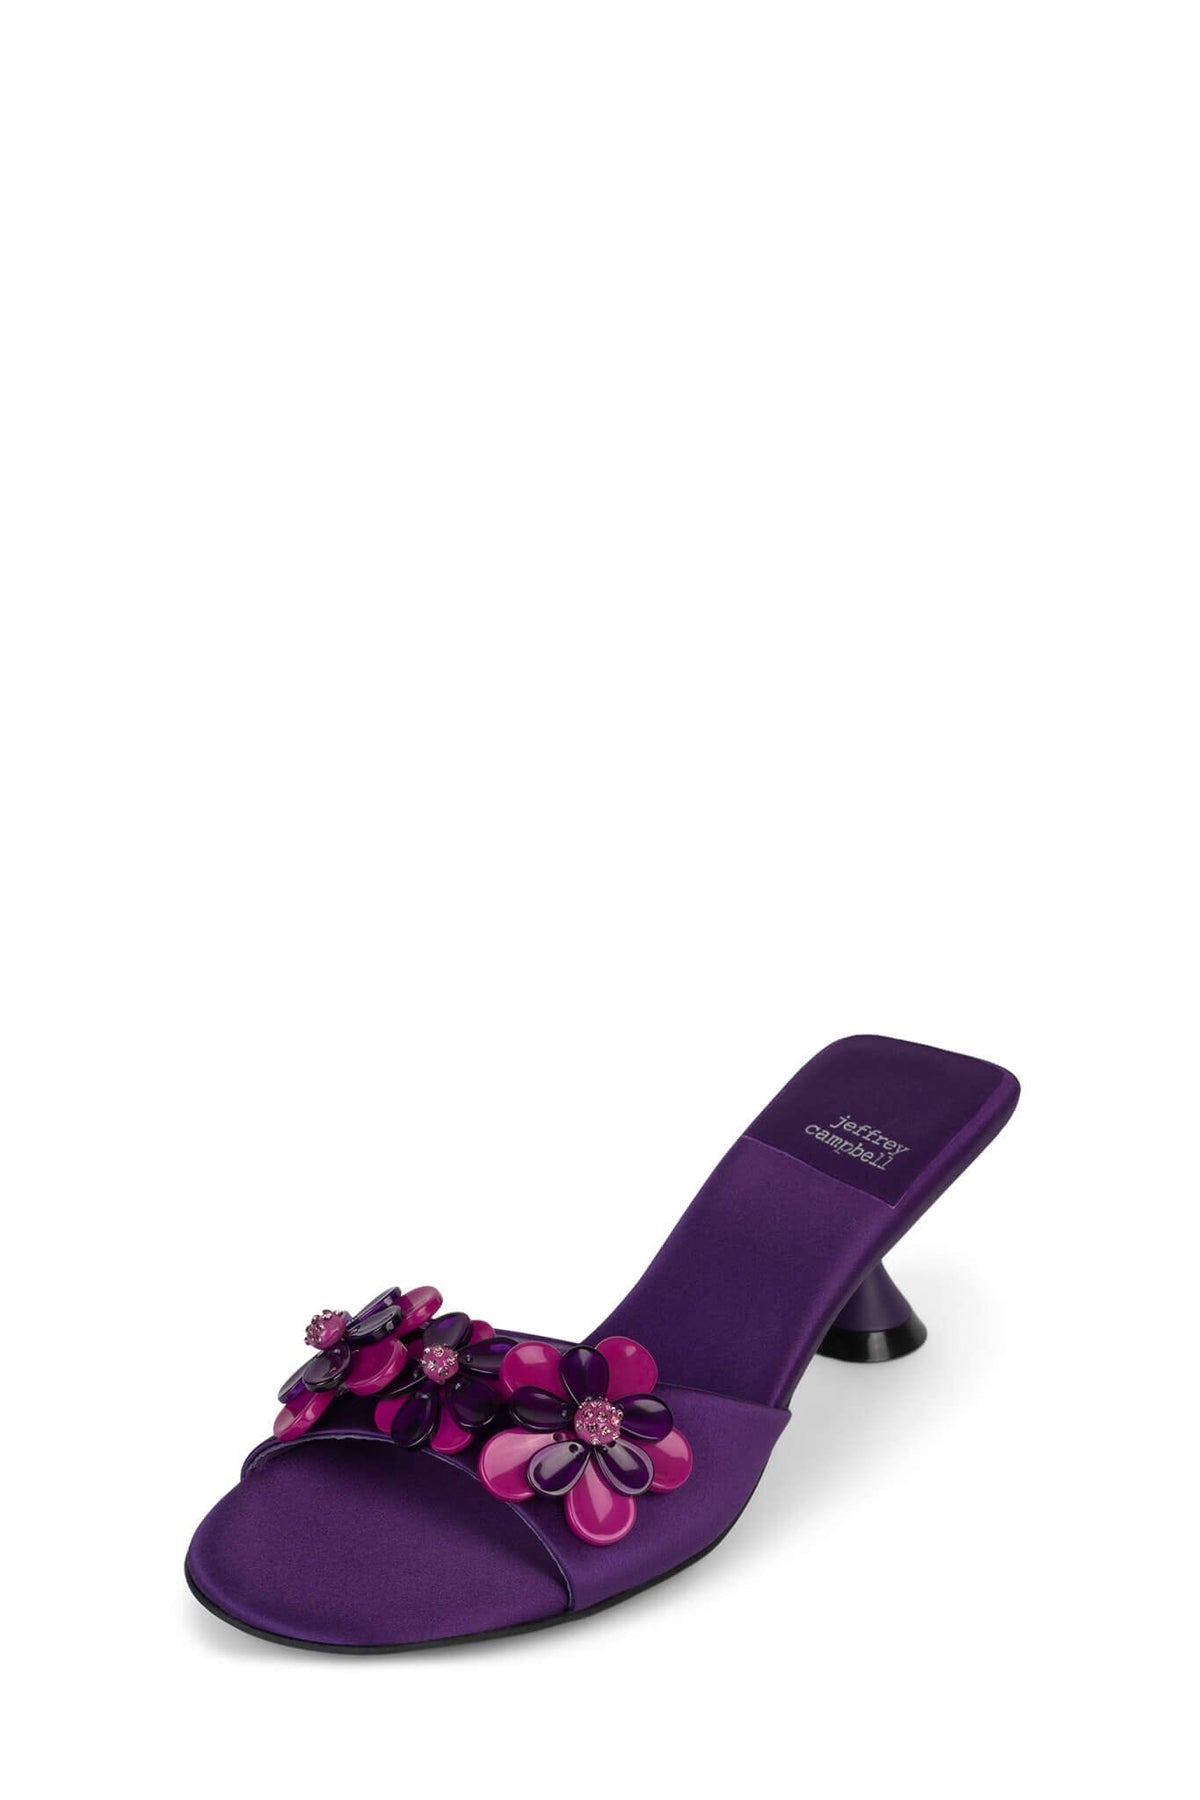 BLOOMS Jeffrey Campbell Kitten Heel Sandal Purple Satin Combo 